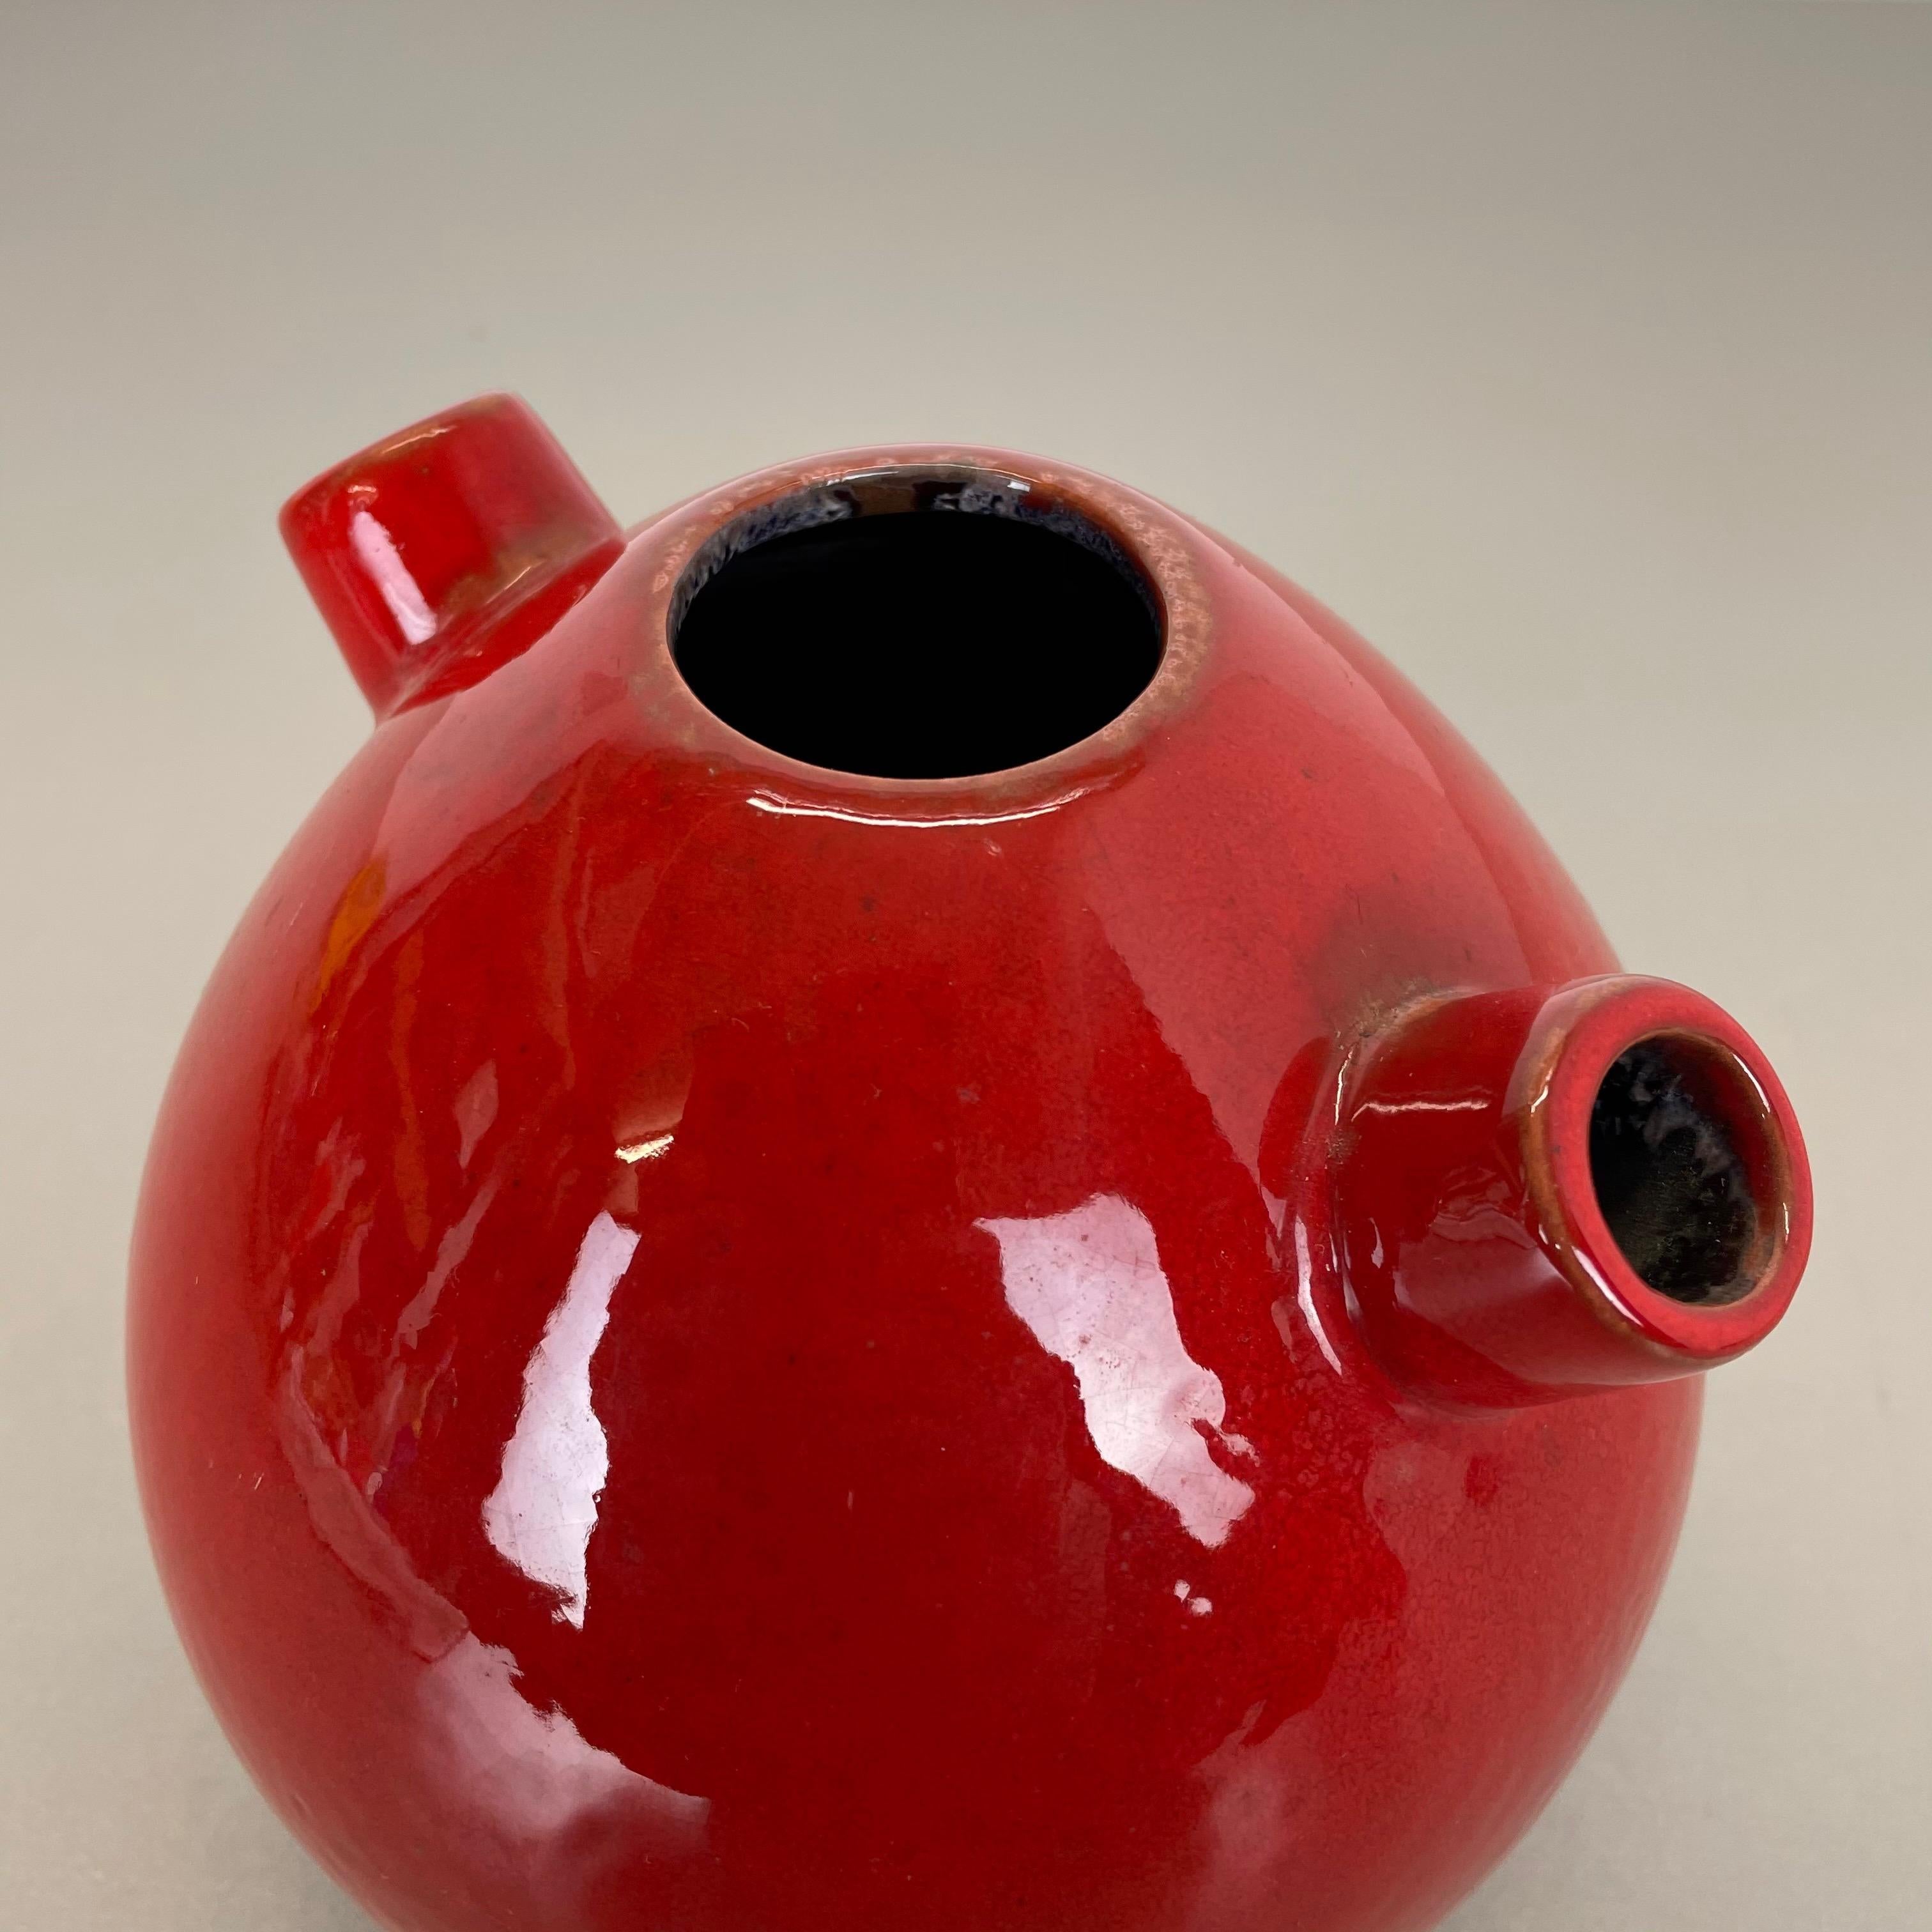 Original 1970 Red Ceramic Studio Pottery Vase by Marei Ceramics, Germany For Sale 2